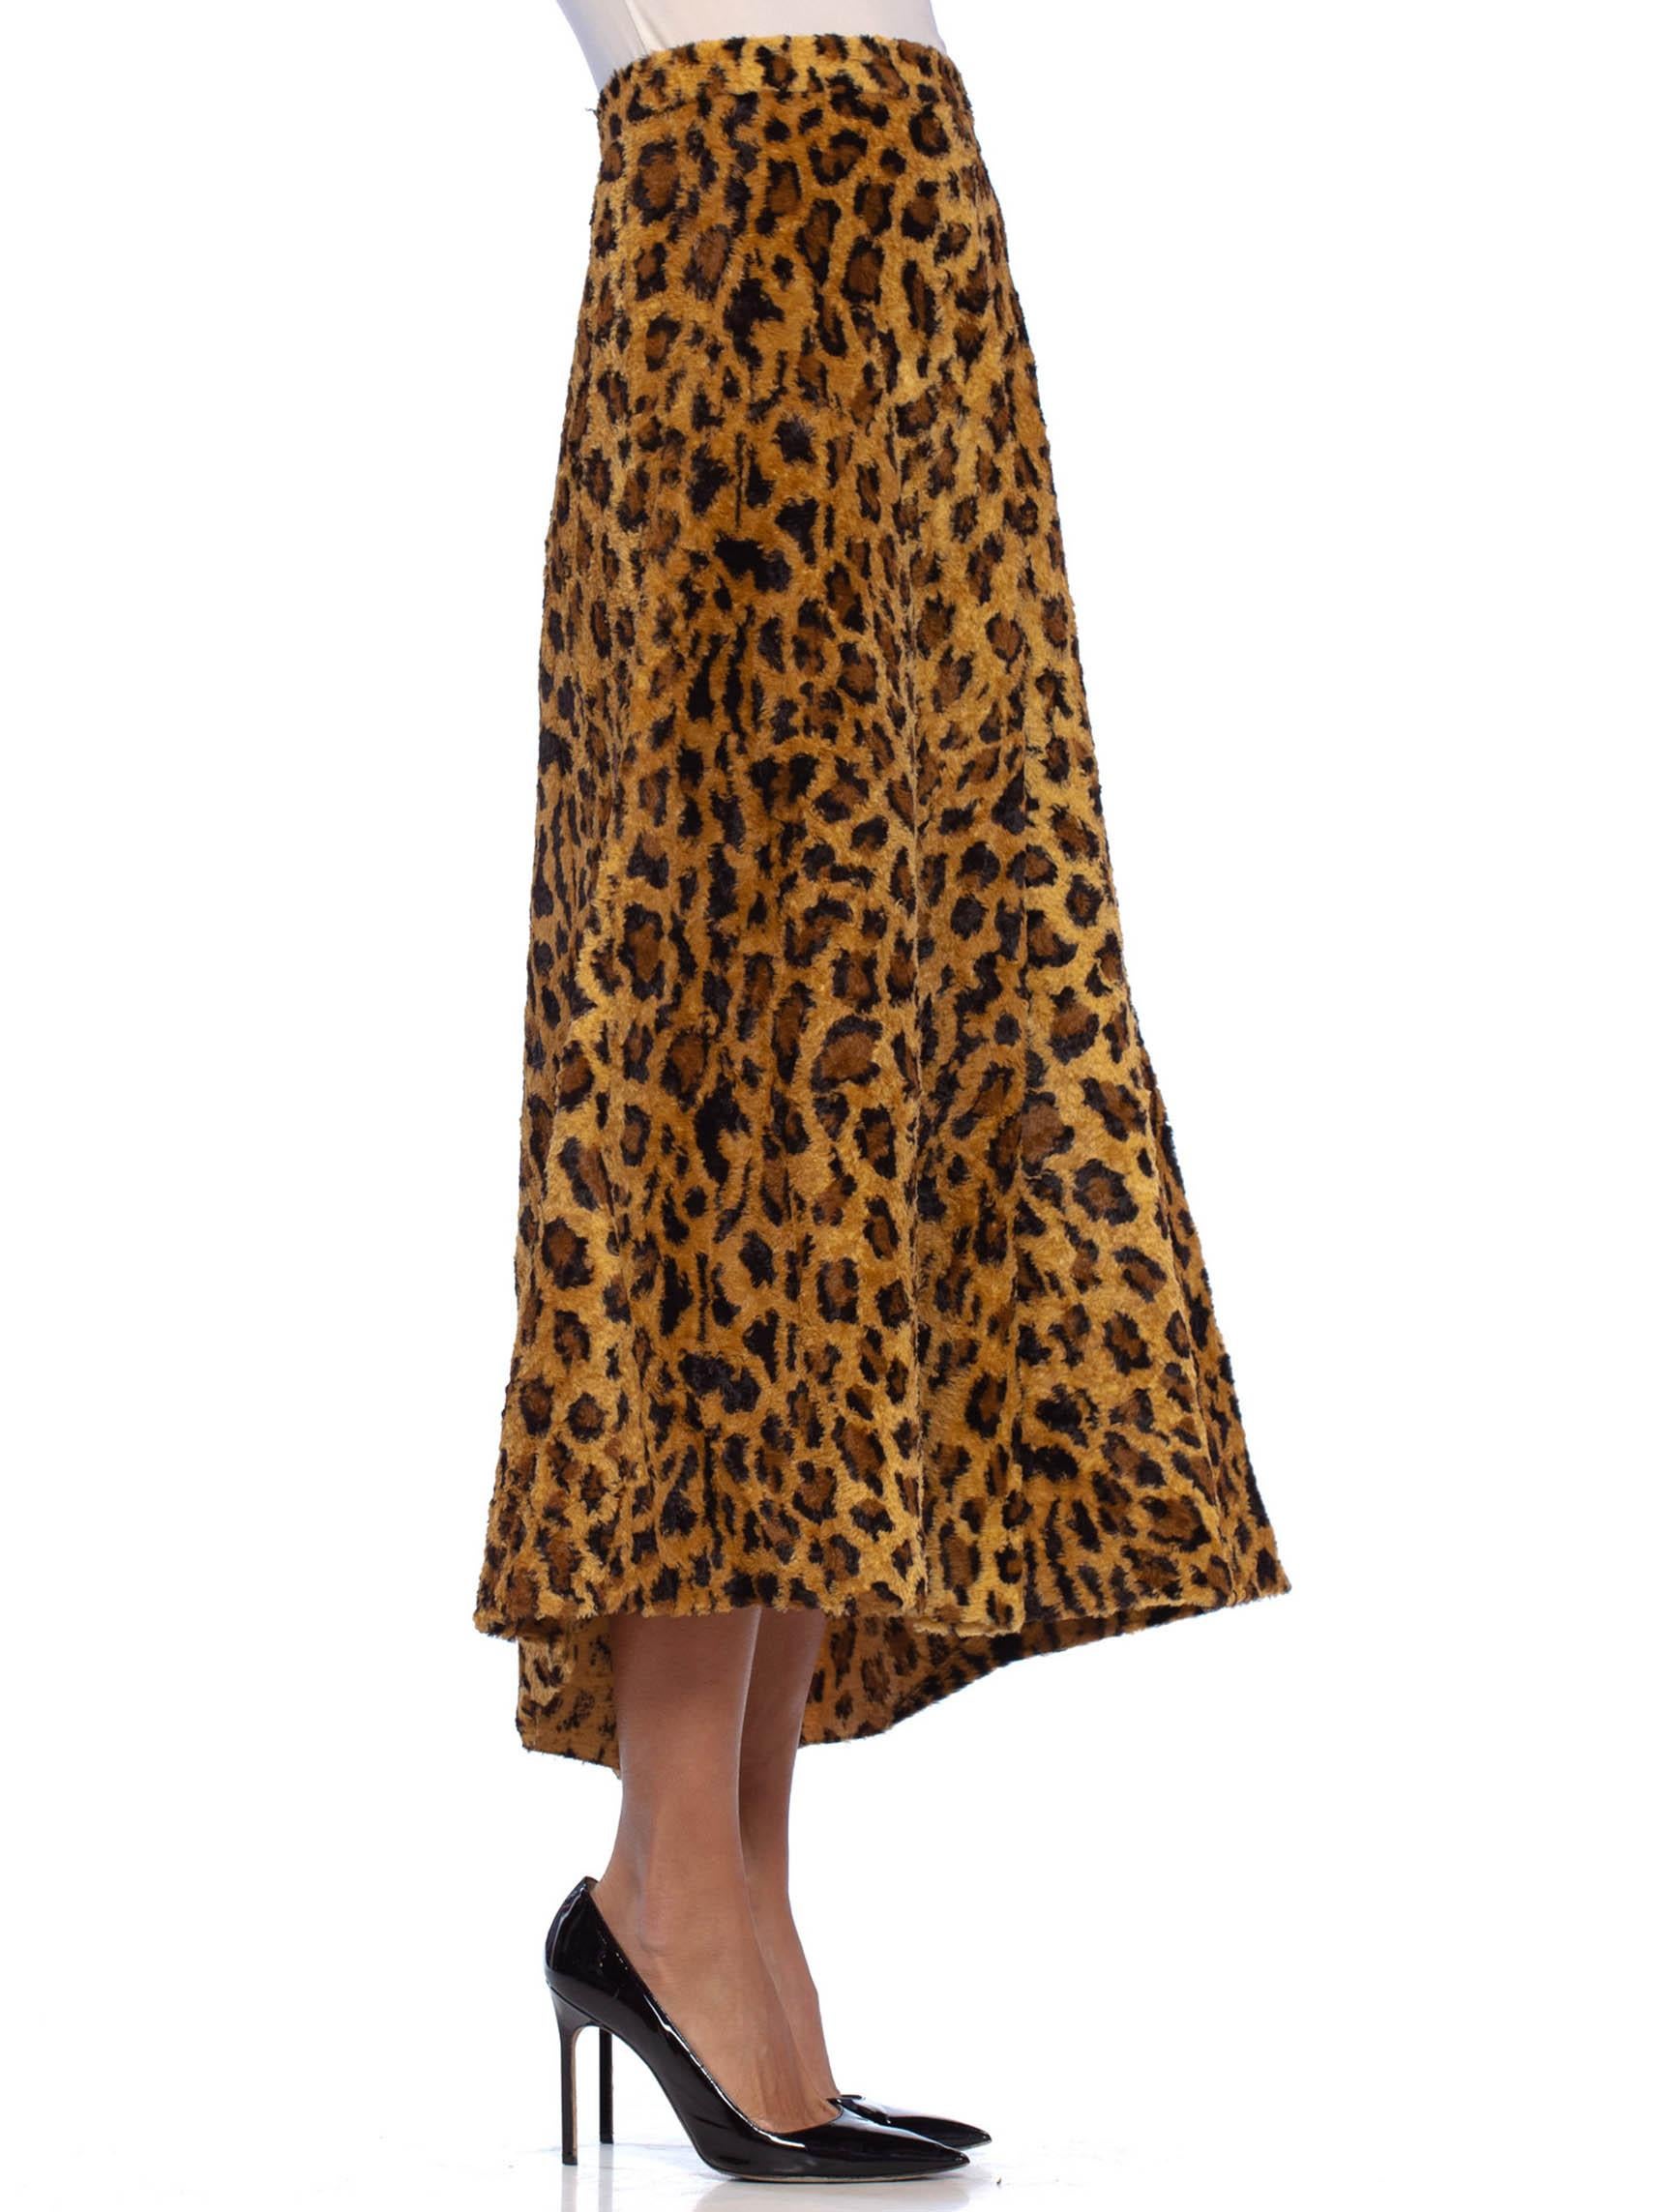 leopard print skirt cotton on